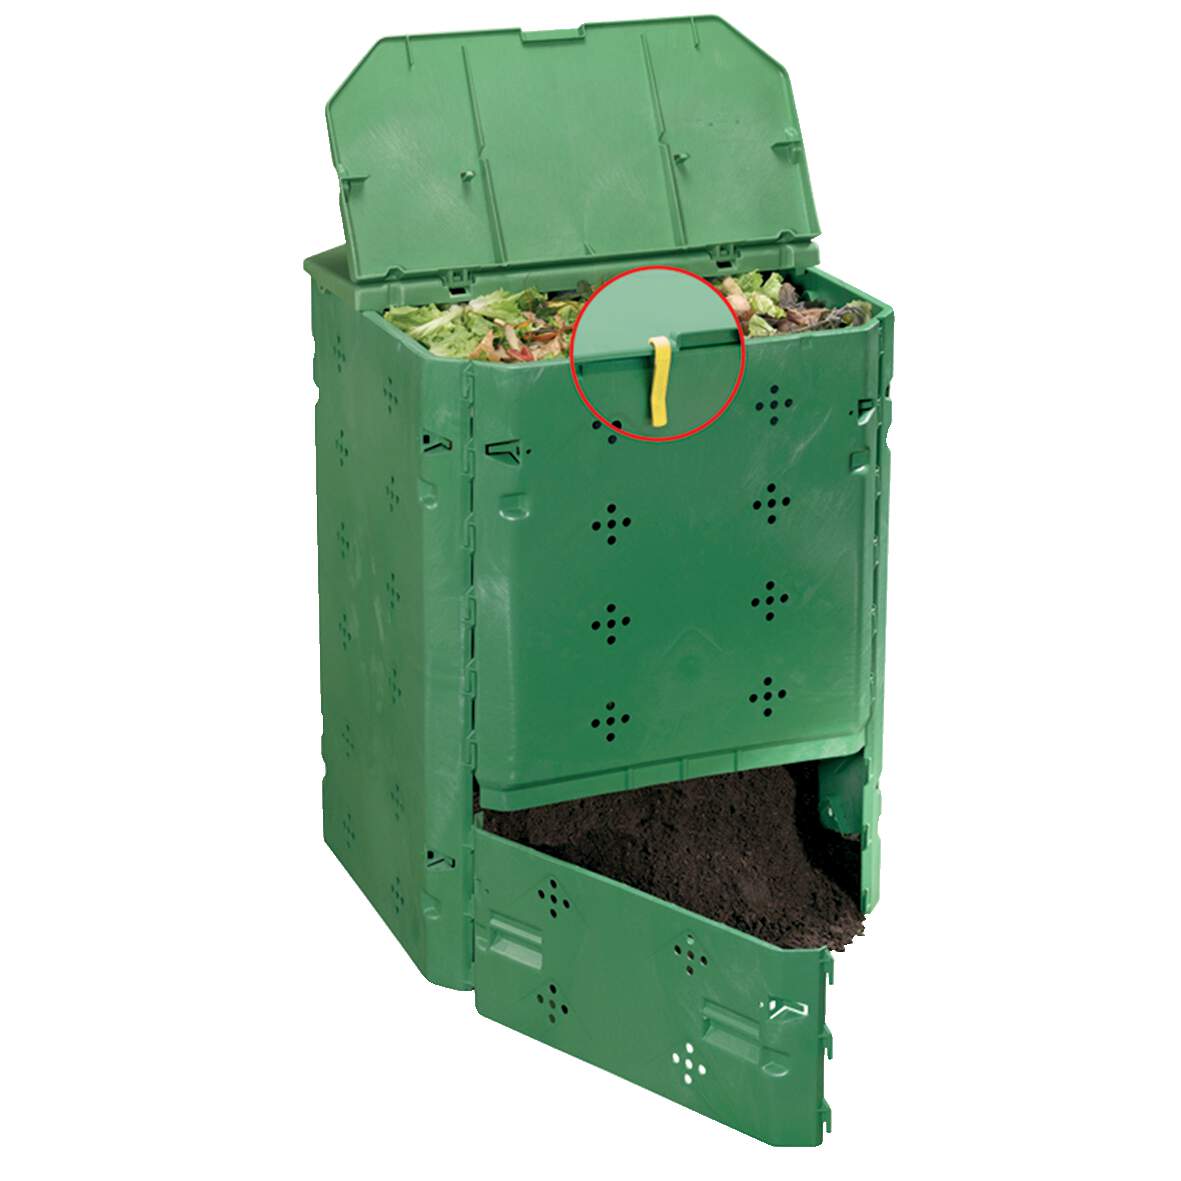 1197095 - Komposter Bio 600 grün